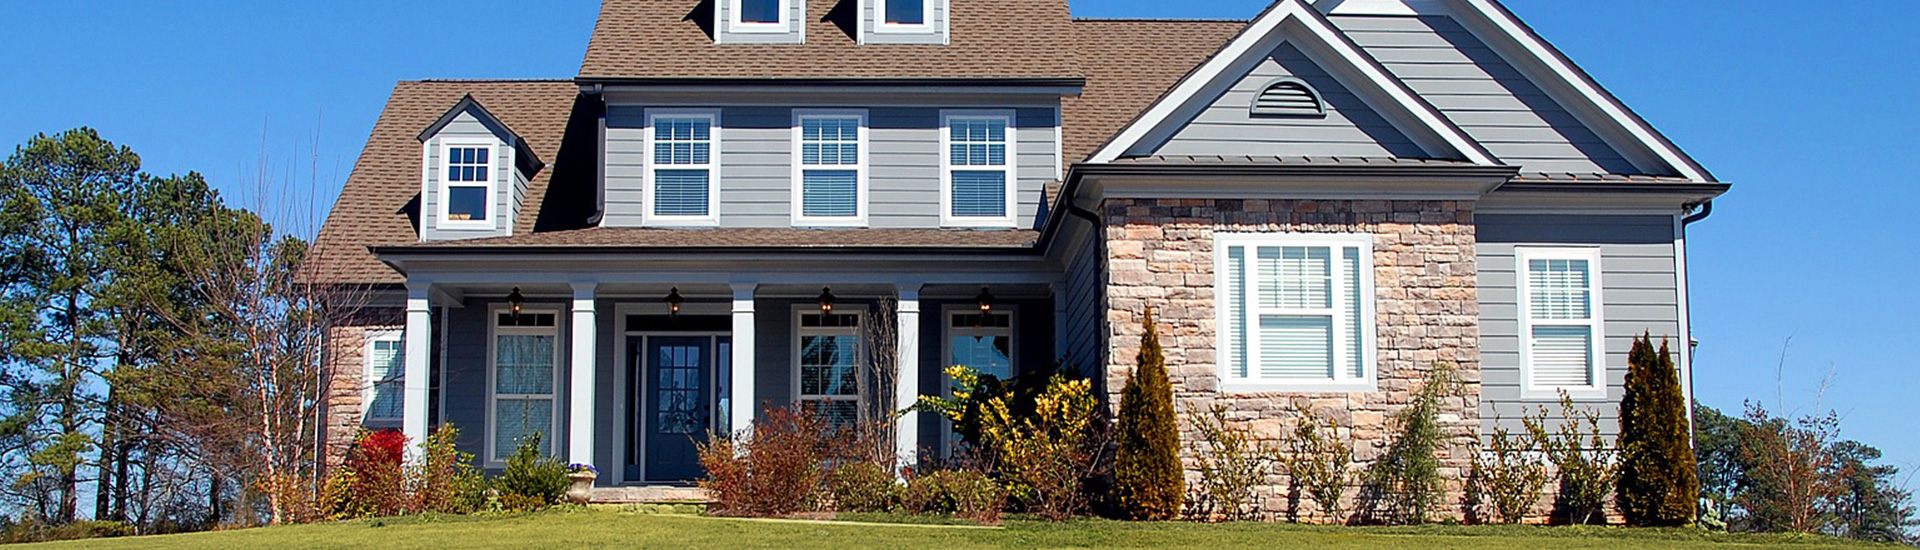 Home Insurance in Burlington, IA, Homeowner's Insurance